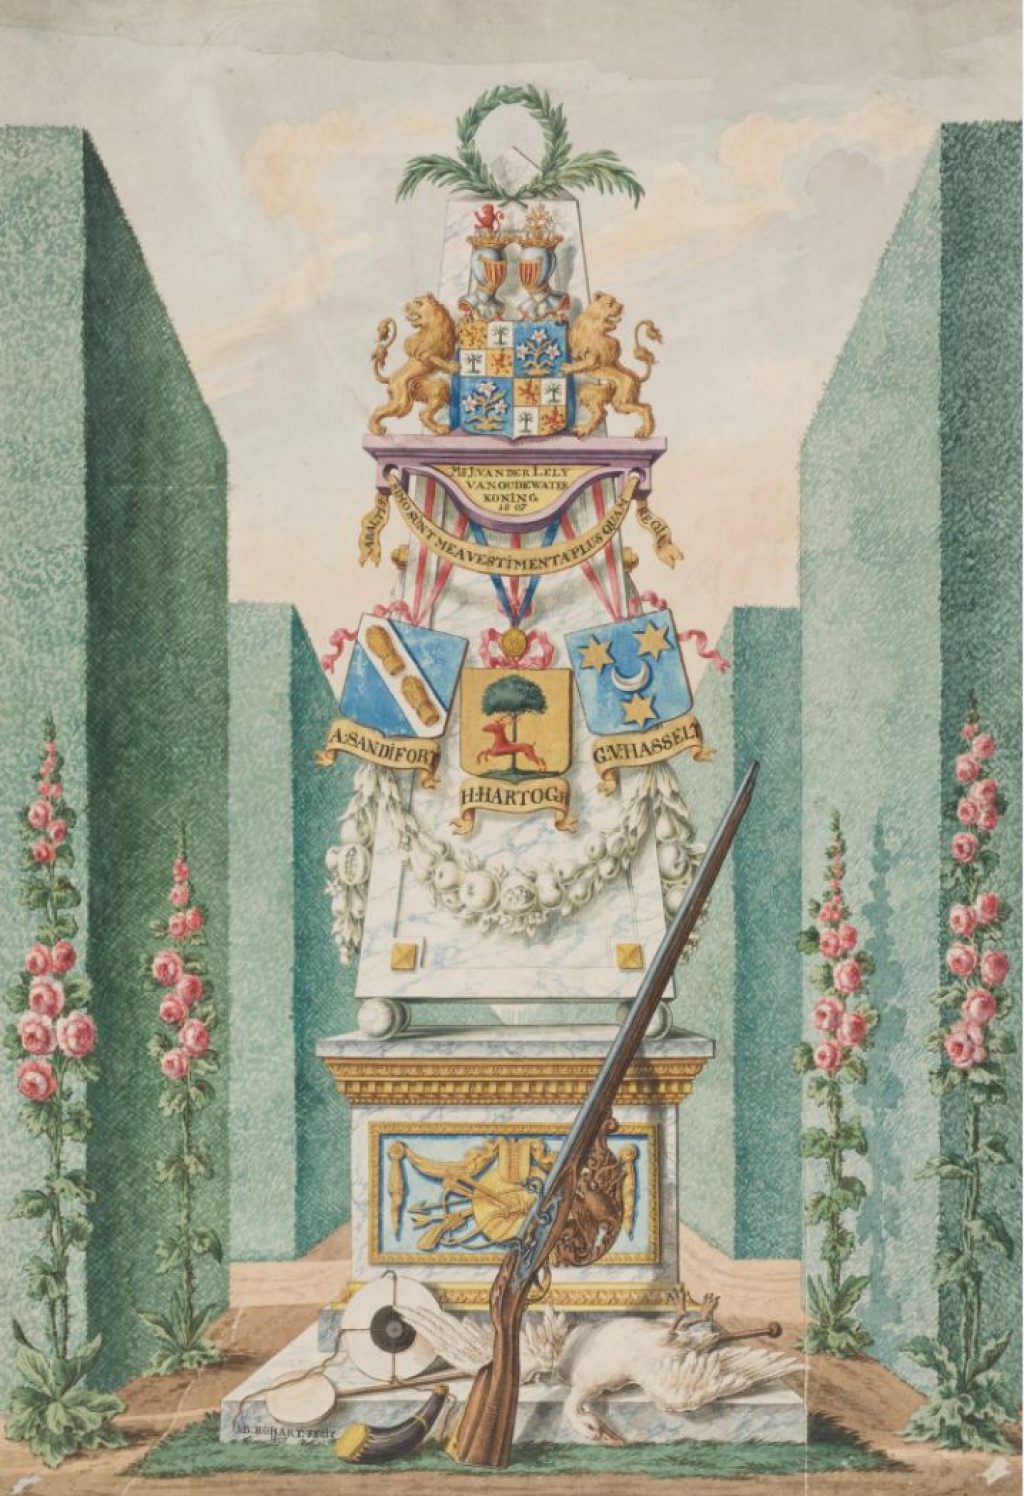 Johannis Baptista Robart, Gedenkplaat van mr. J. van der Lely van Oudewater, koning van de Confrerie Diletto ed Arme, 1807 (TMS 74657)